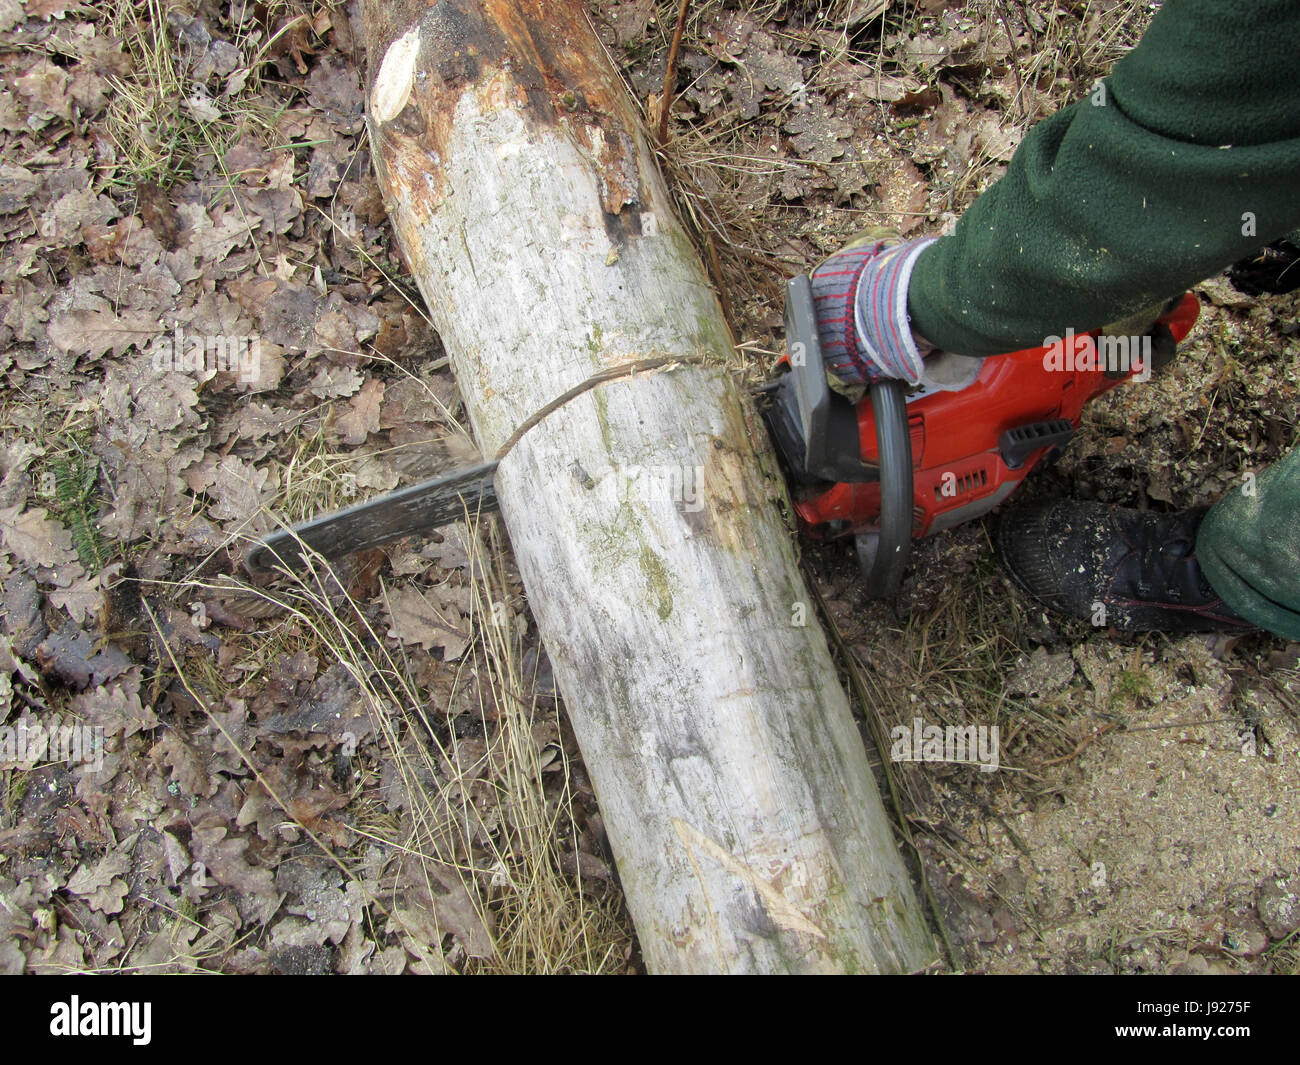 trunk, saw, chain saw, cut, myth, say, firewood, woodcarving, orange, tool, Stock Photo